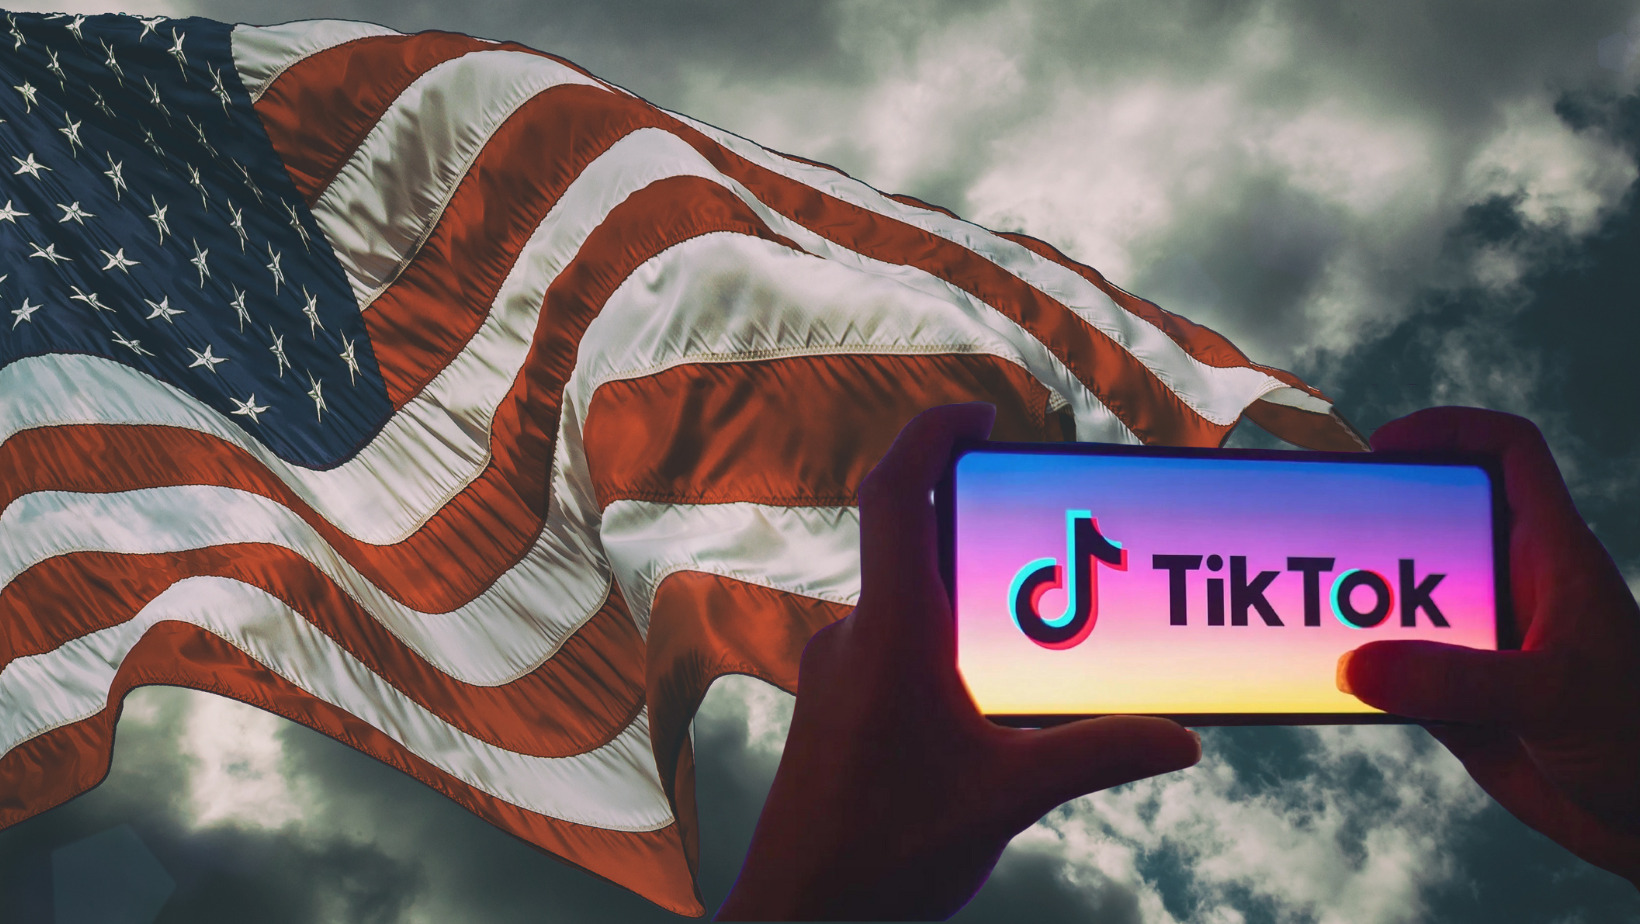 Legisladores estadounidenses amenazan con prohibir TikTok